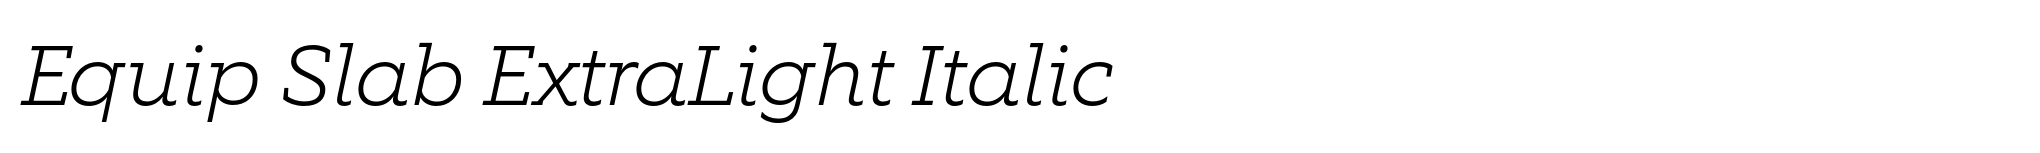 Equip Slab ExtraLight Italic image